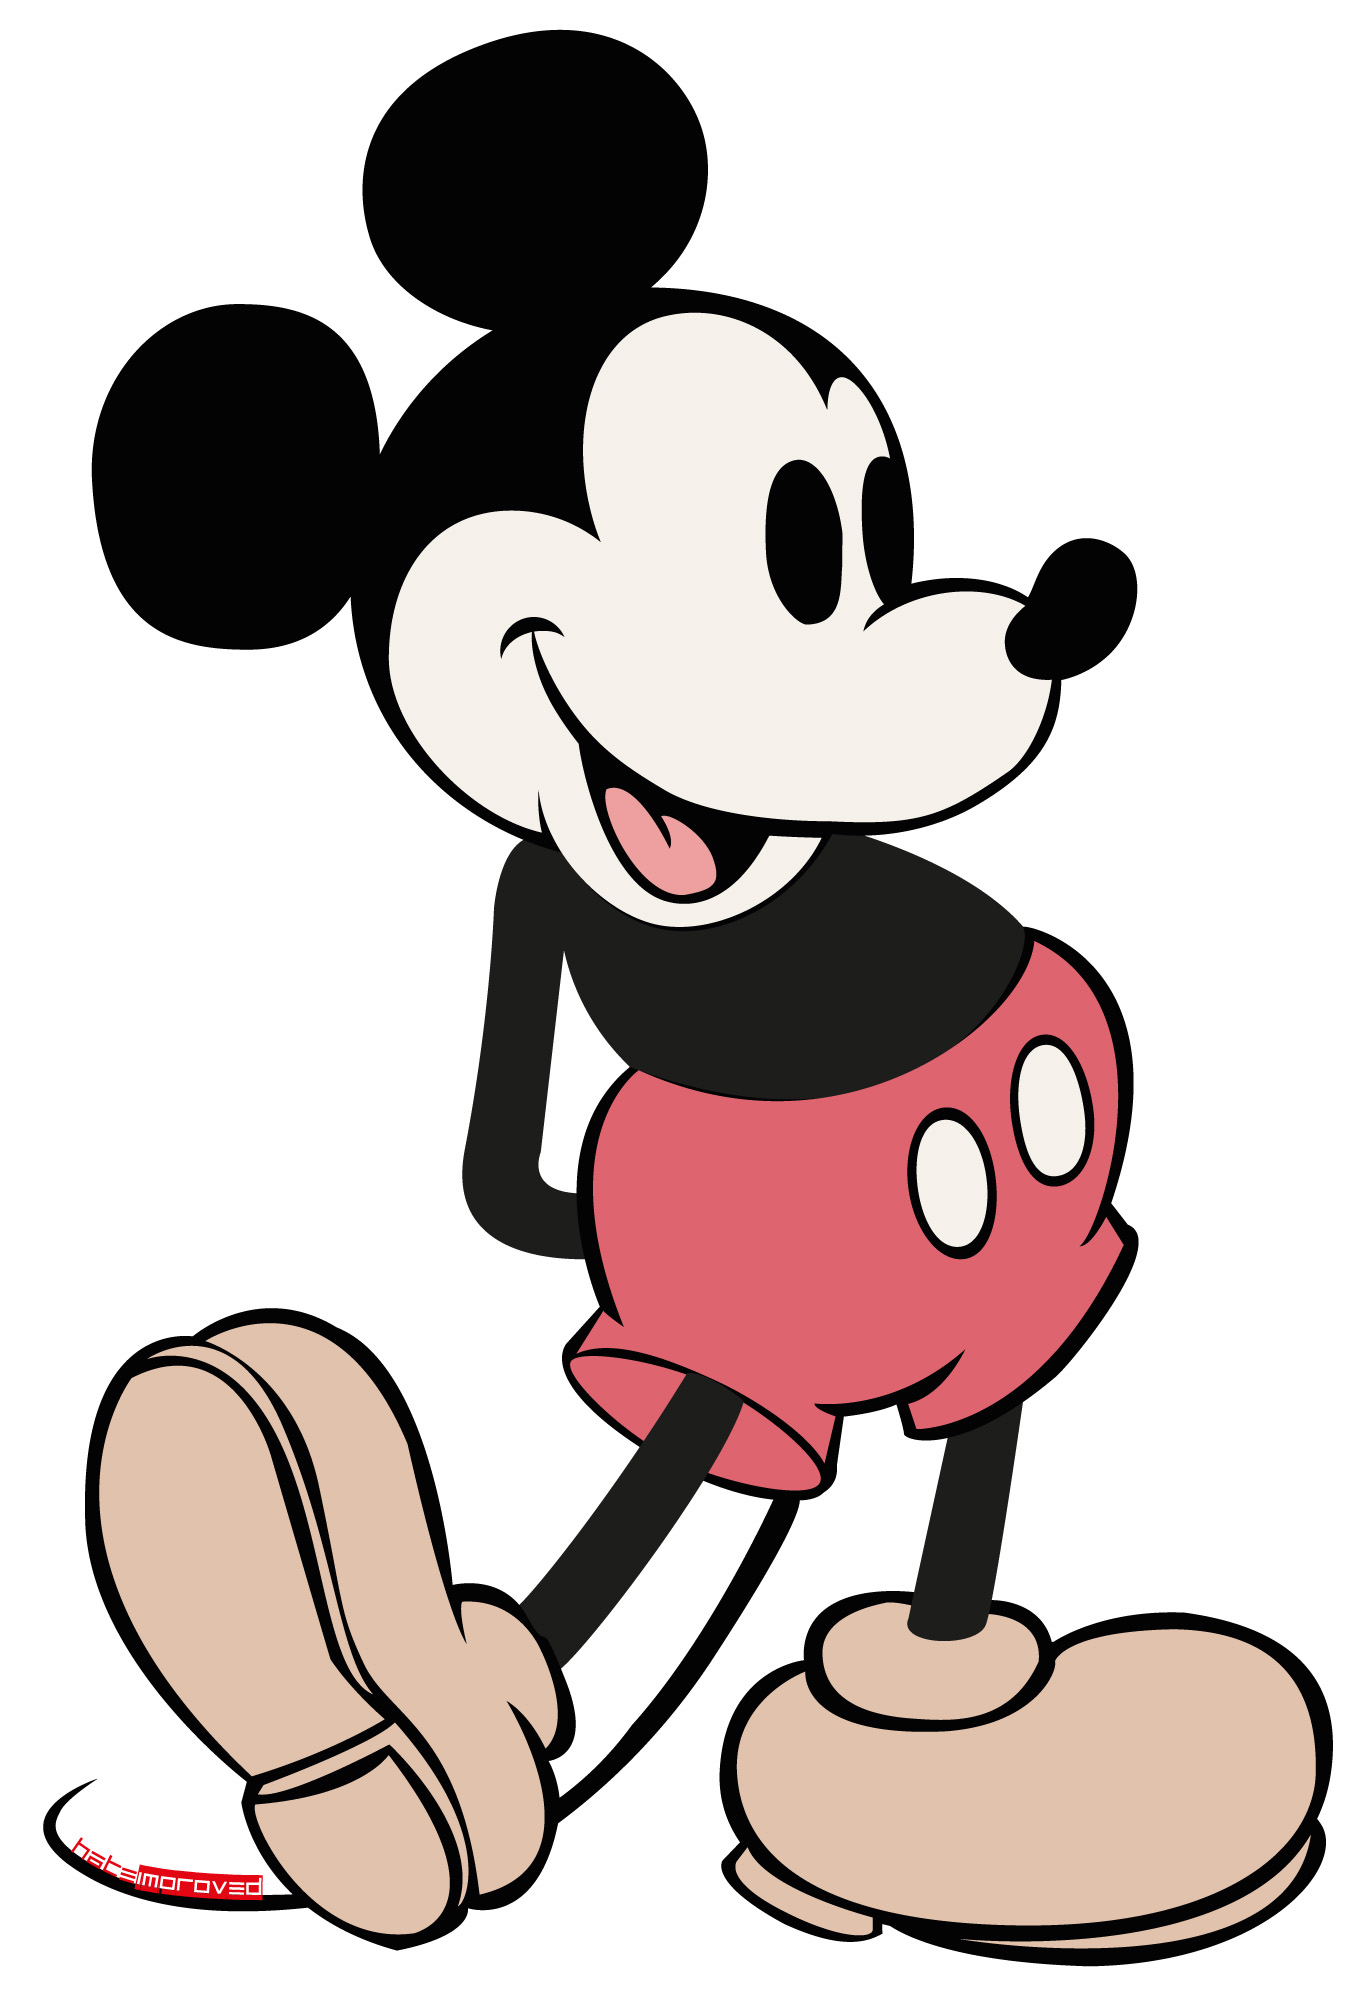 disney mickey mouse vector clipart - photo #25